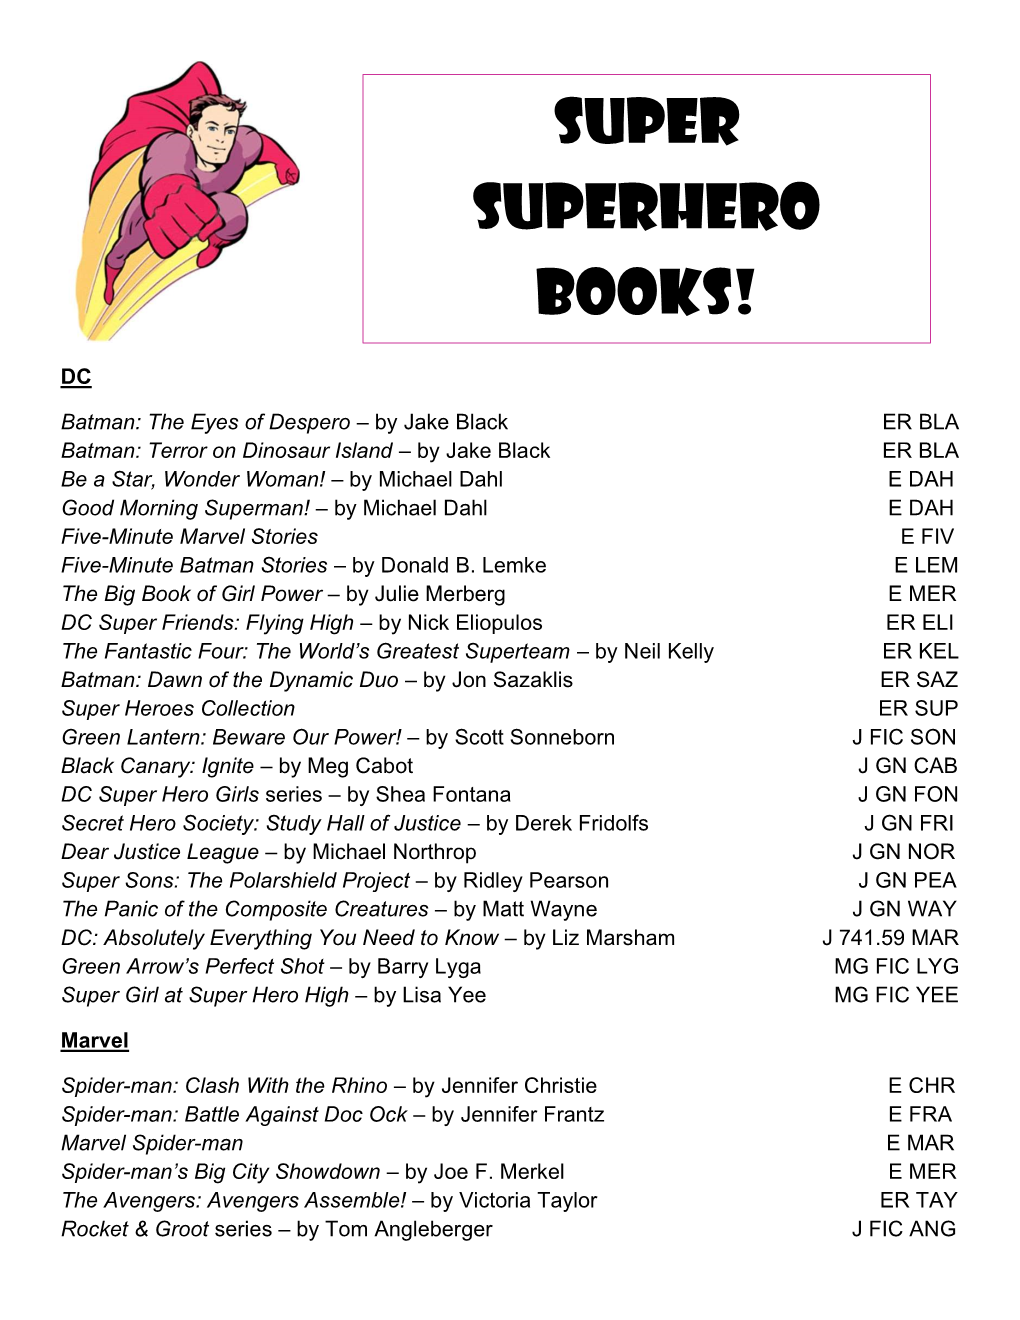 Super Superhero Books!